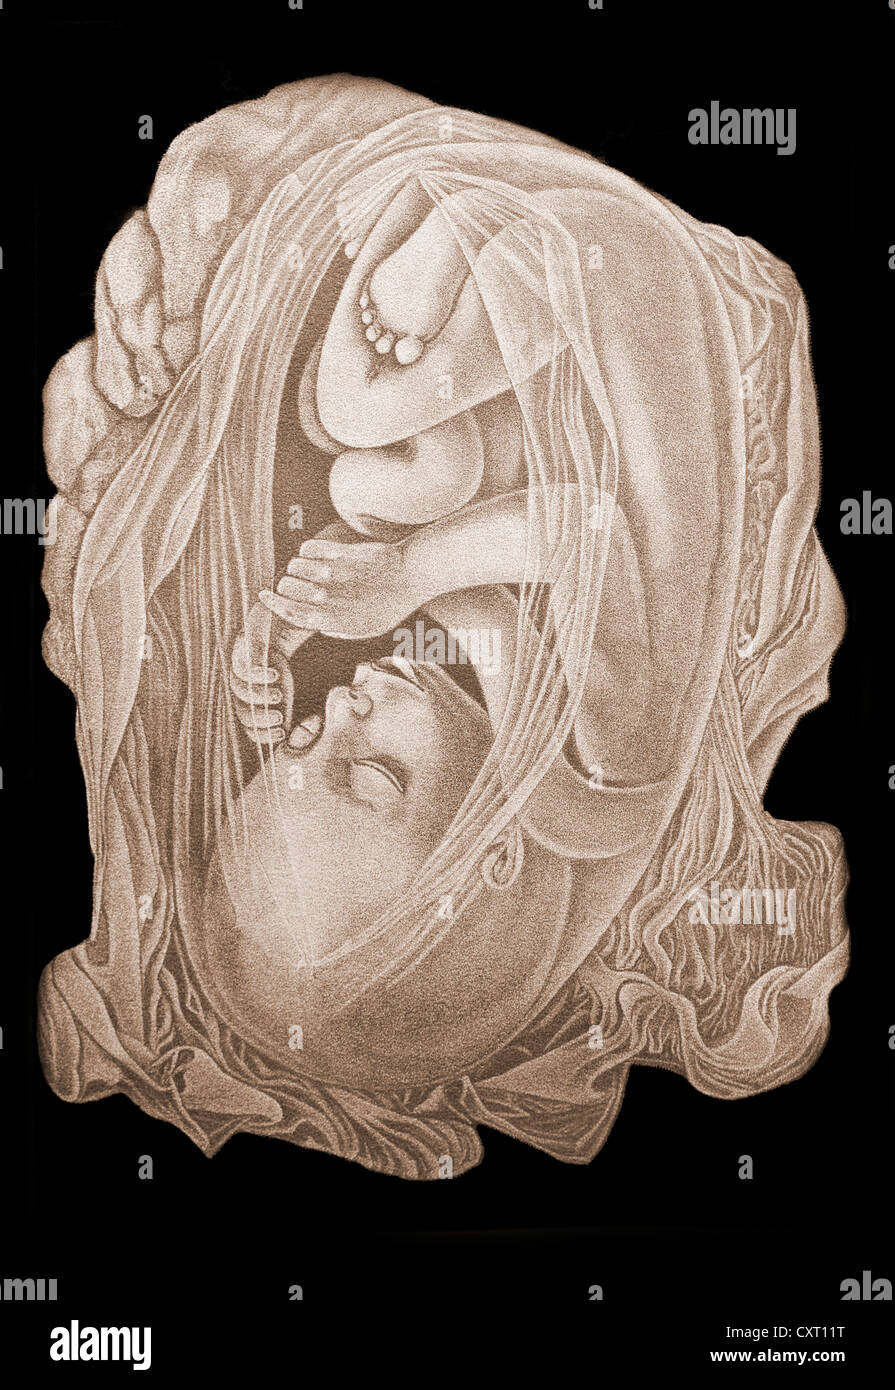 Embryo, anatomical illustration Stock Photo